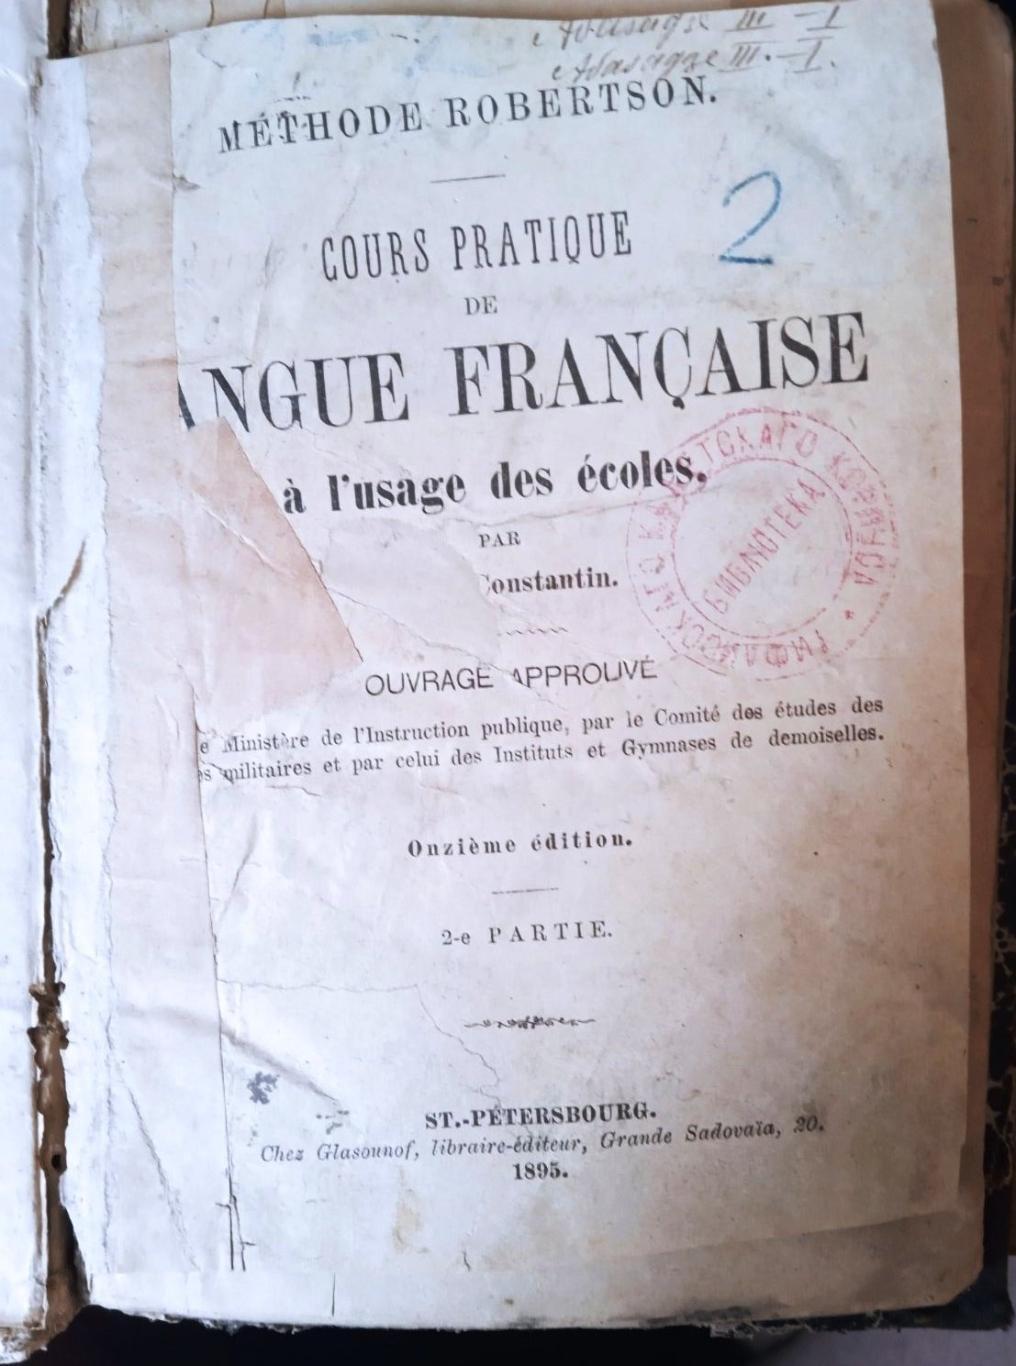 Cours pratioue de langue francaise. Практический курс французского языка